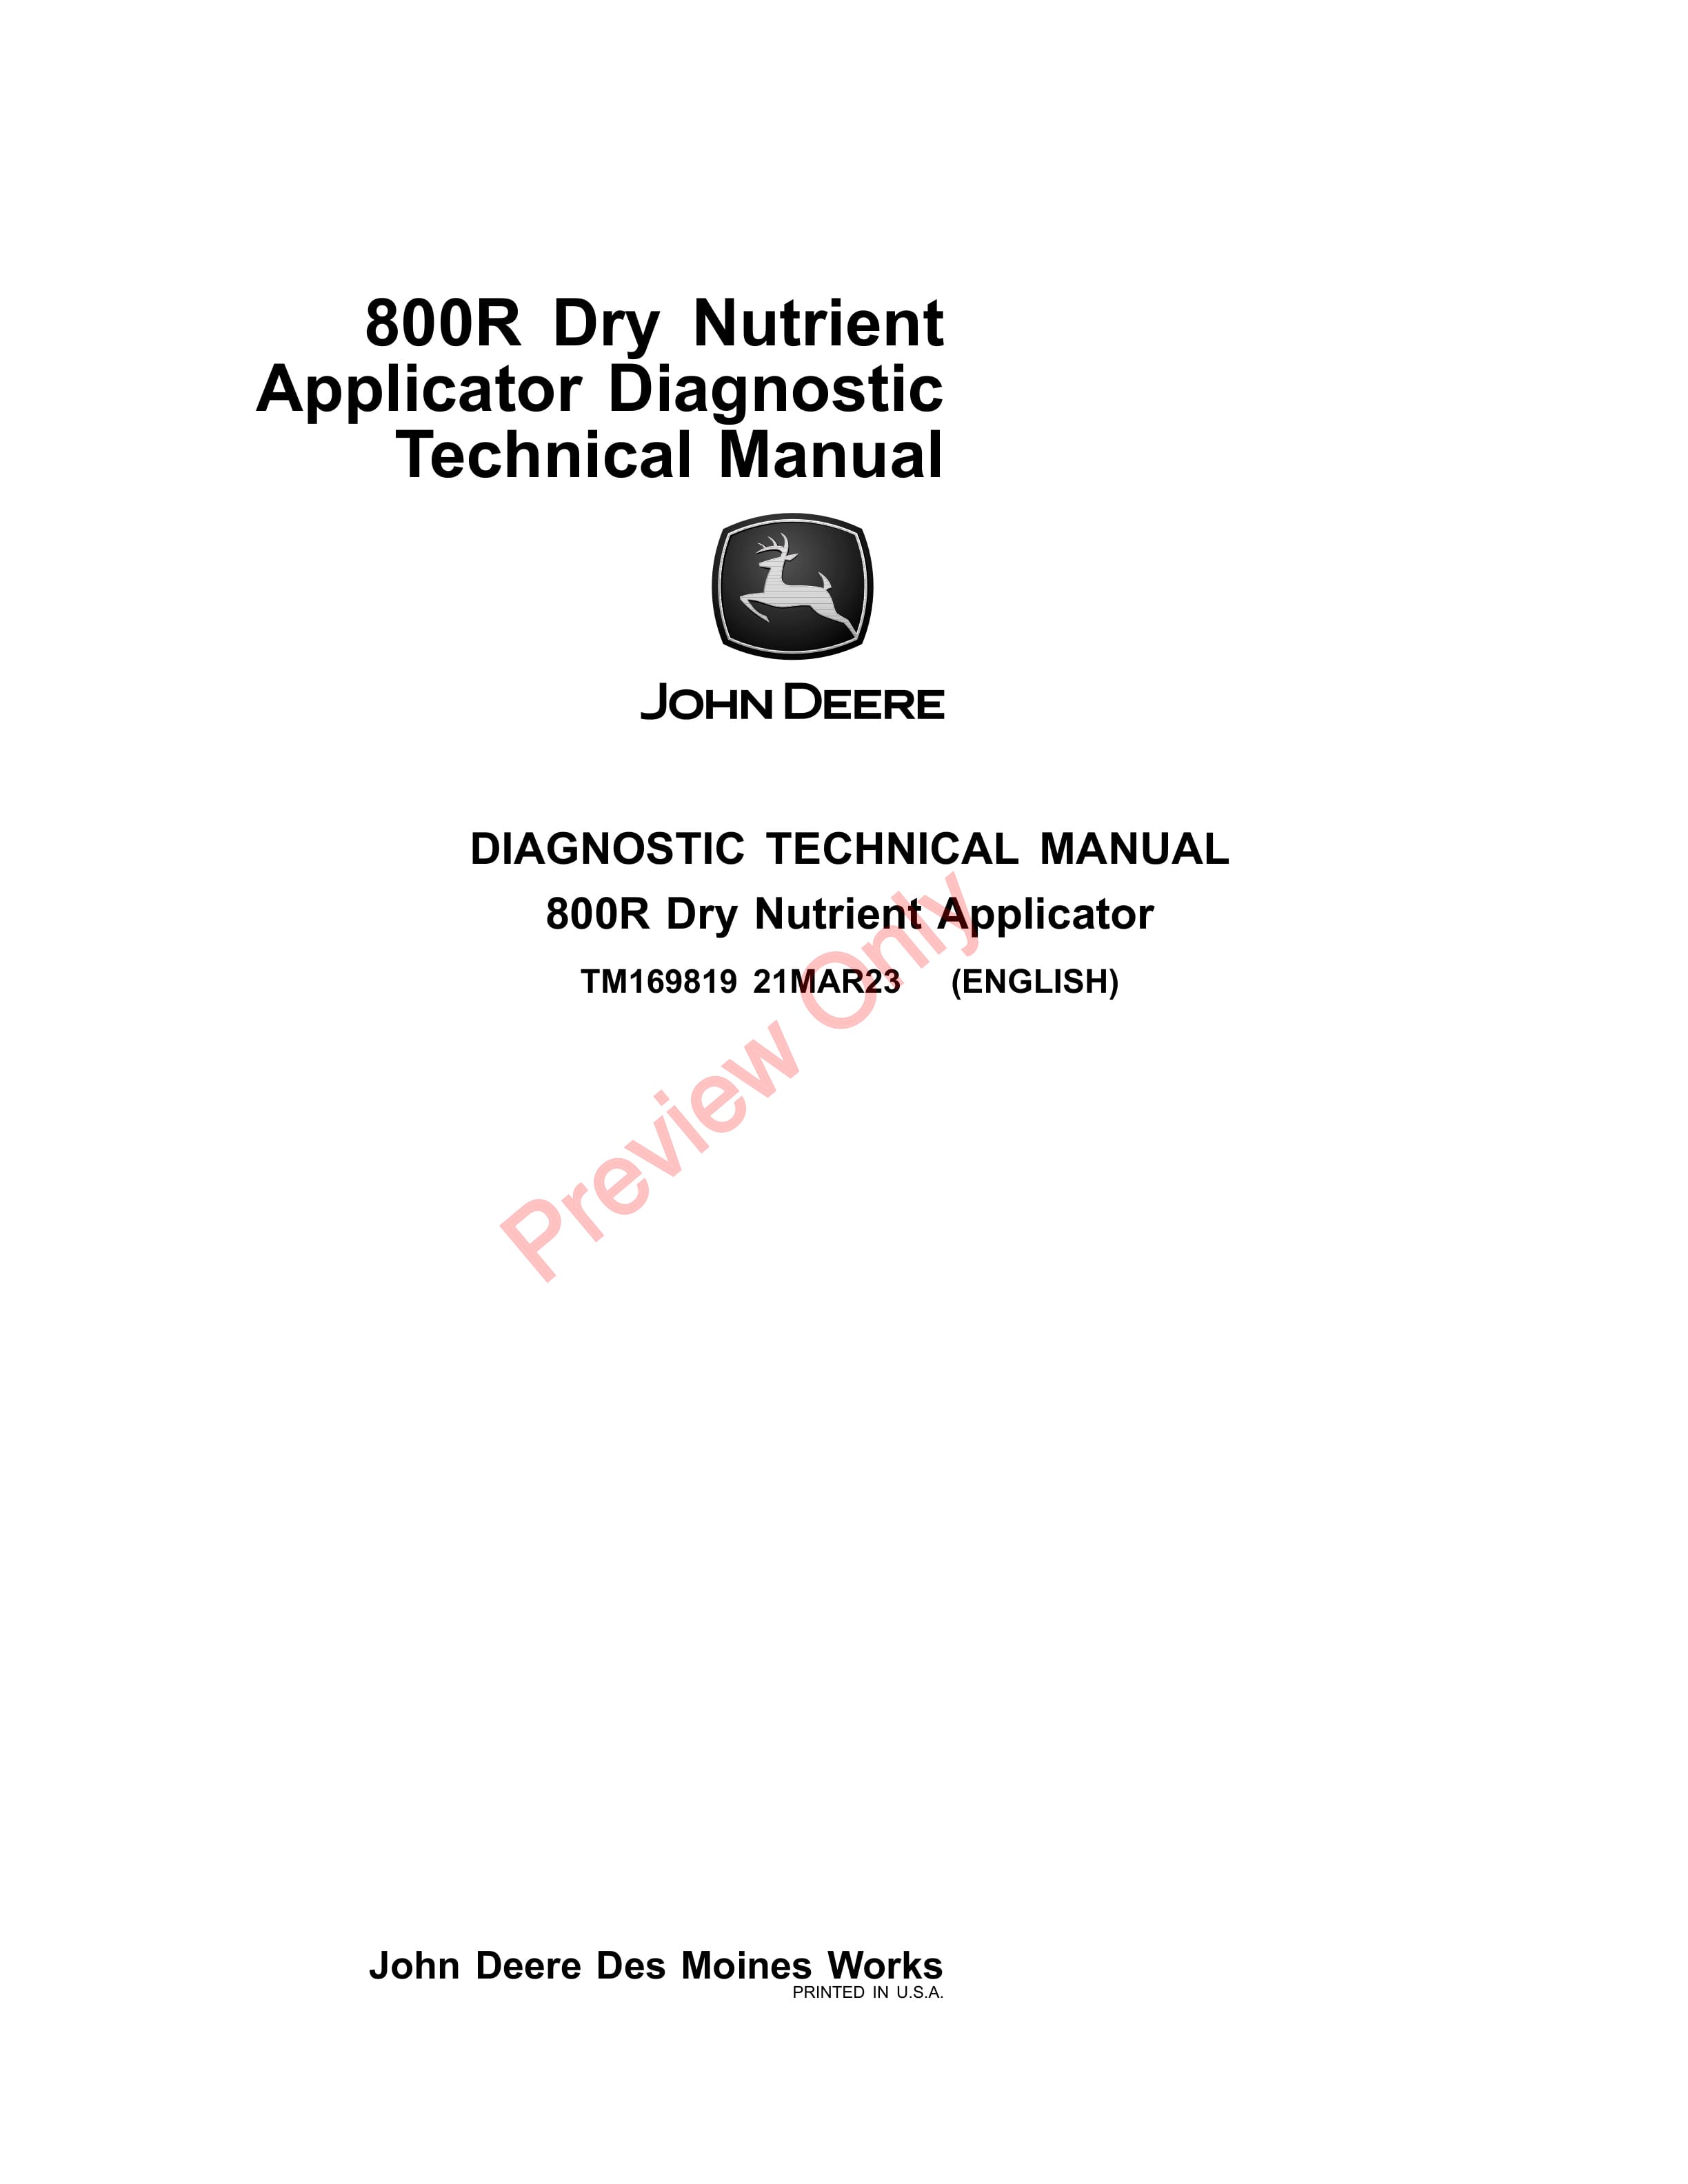 John Deere 800R Dry Nutrient Applicator Diagnostic Technical Manual TM169819 21MAR23 1